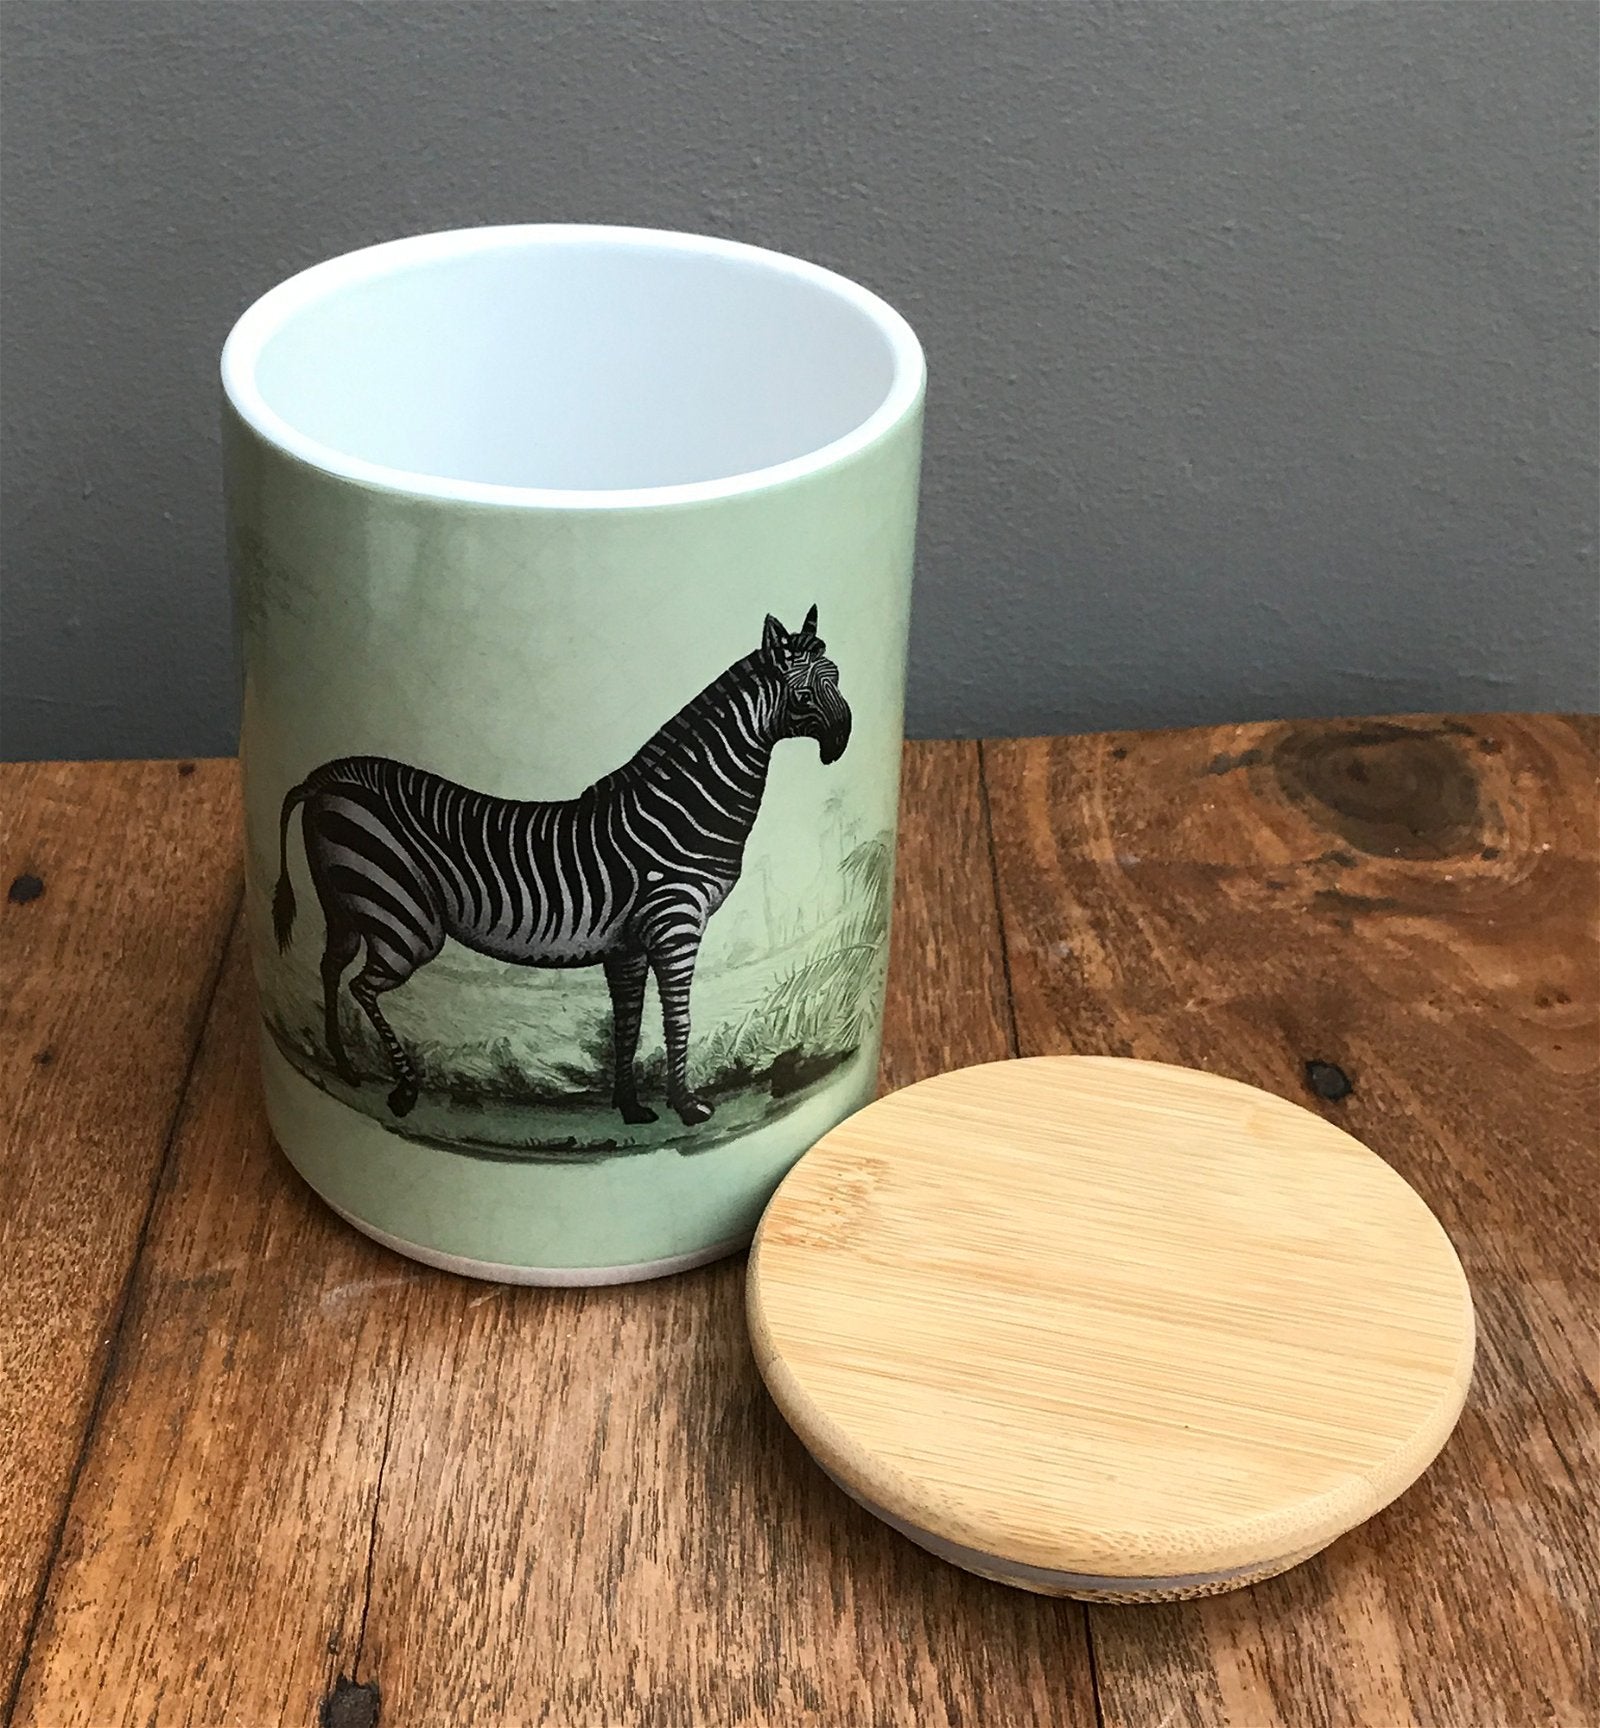 Ceramic Canister With Zebra